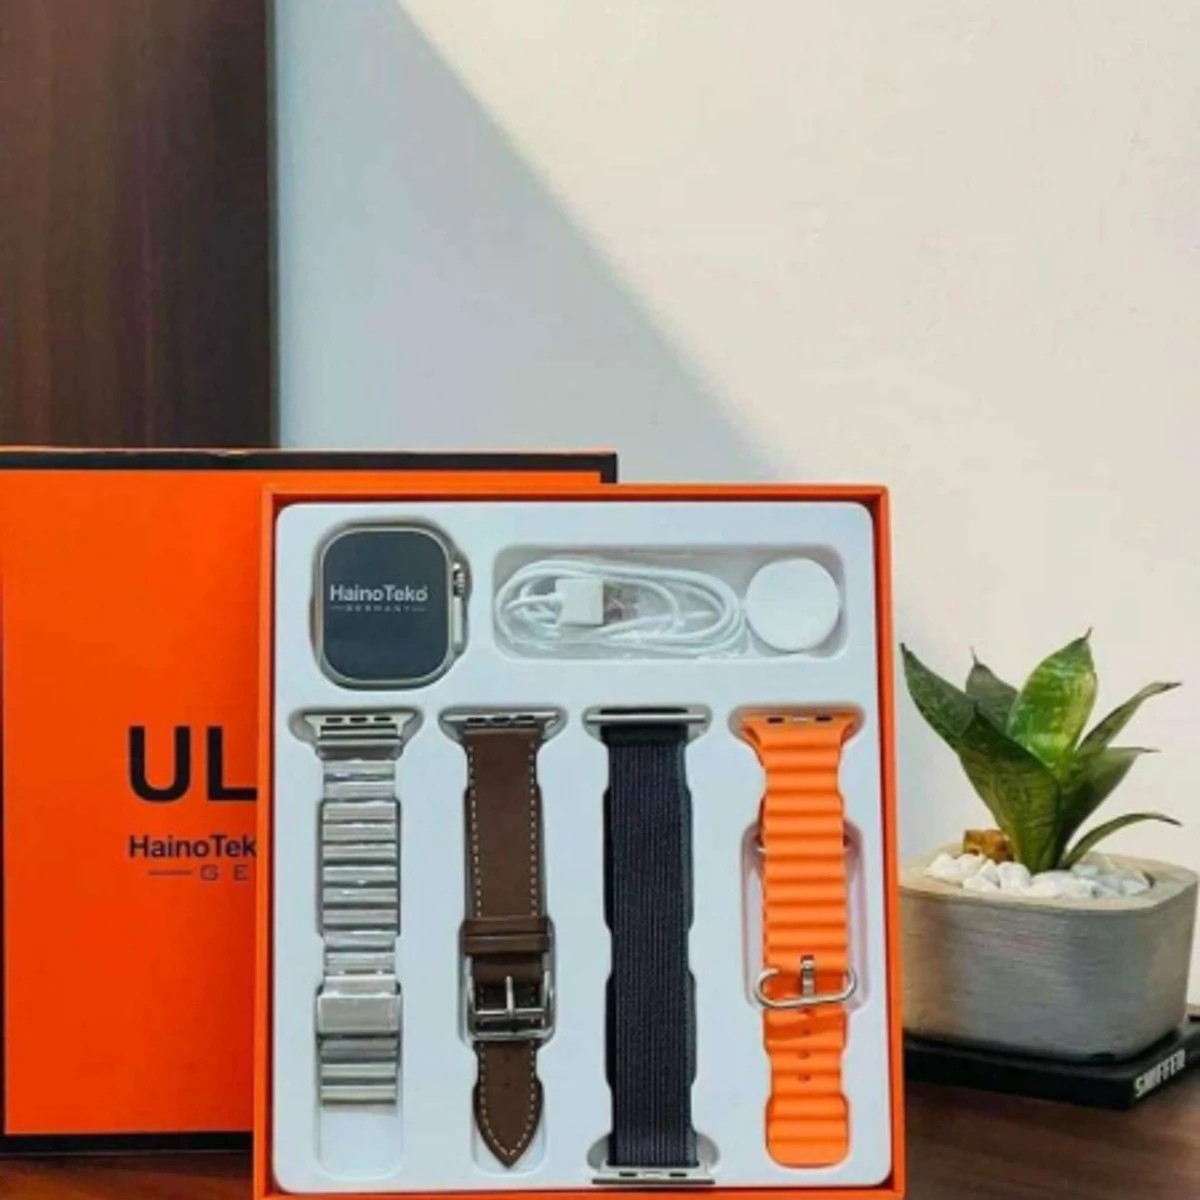 ULTRA Y10 Smart Watch Ultralow Power Consumption